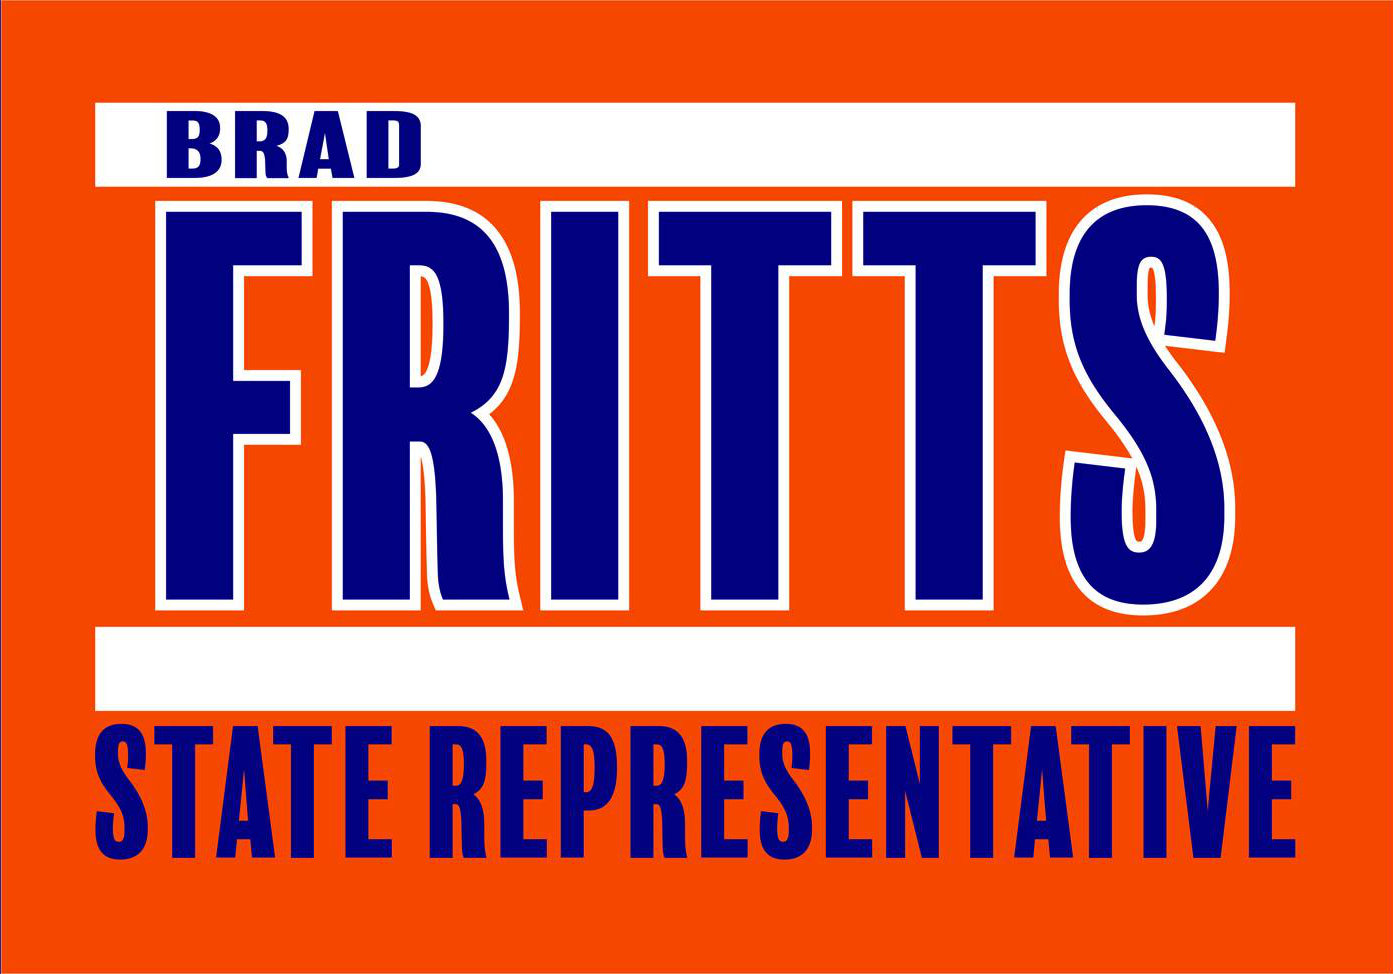 Bradley Fritts For State Representative